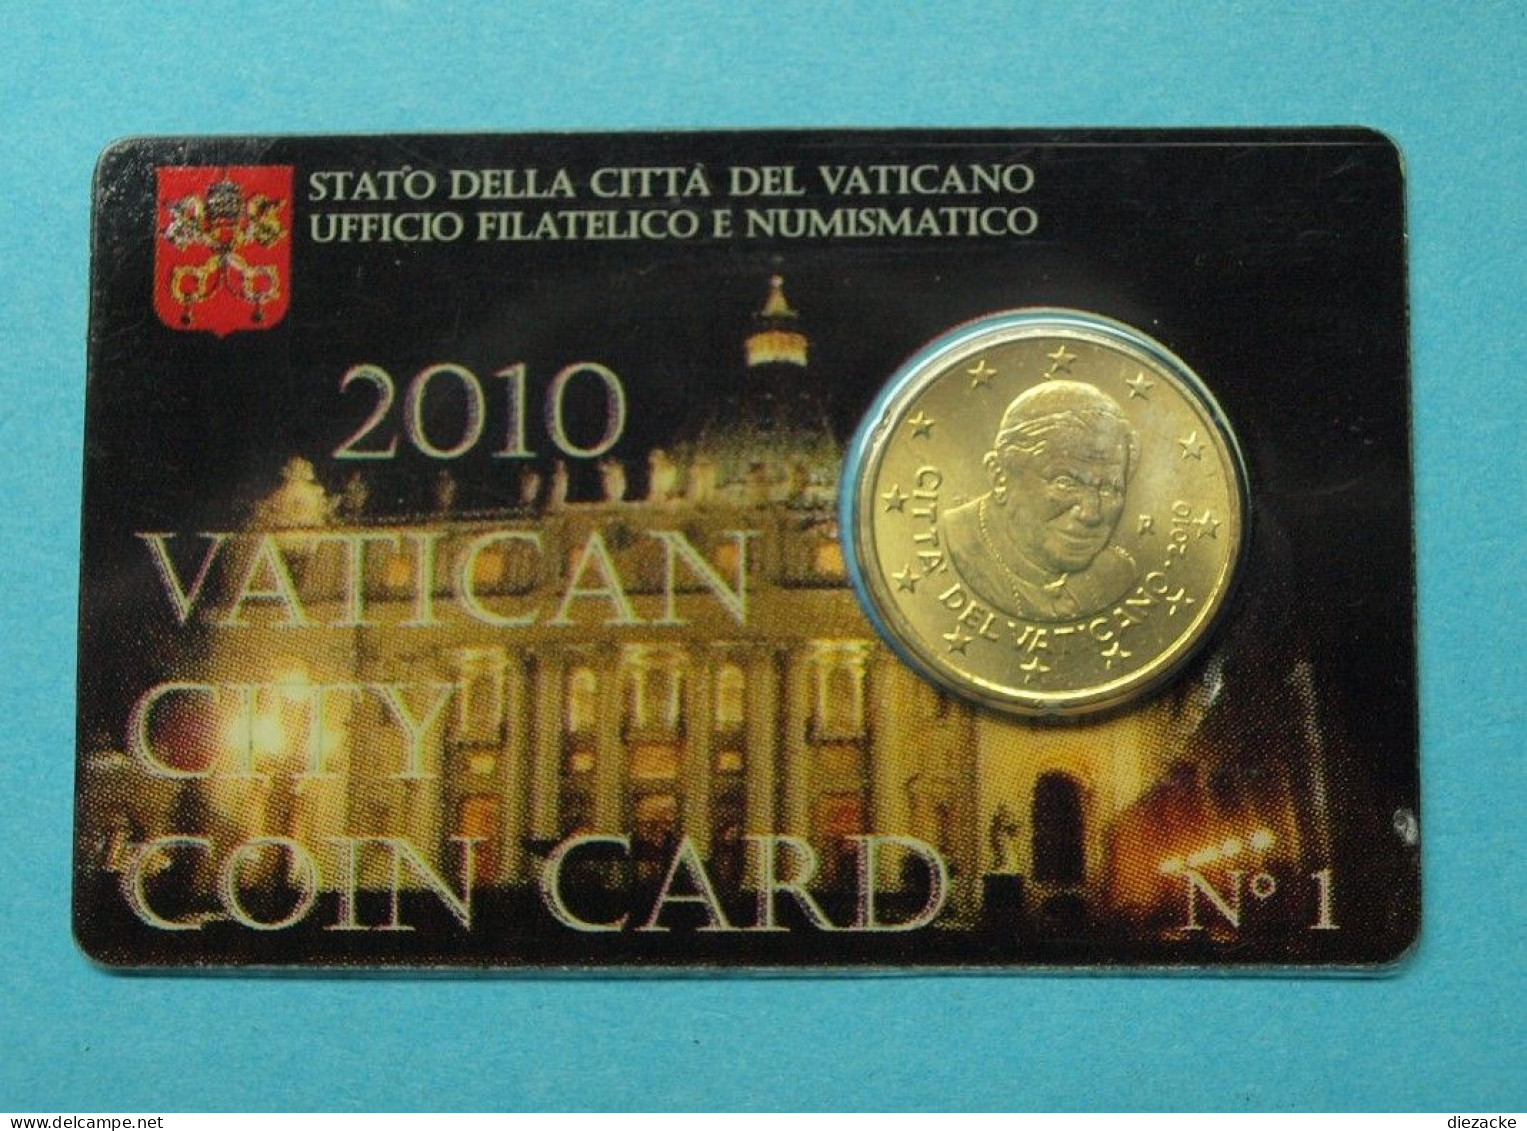 Vatikan 2010 Coincard 50 Cent No. 1 Unzirkuliert (M5370 - Vatikan